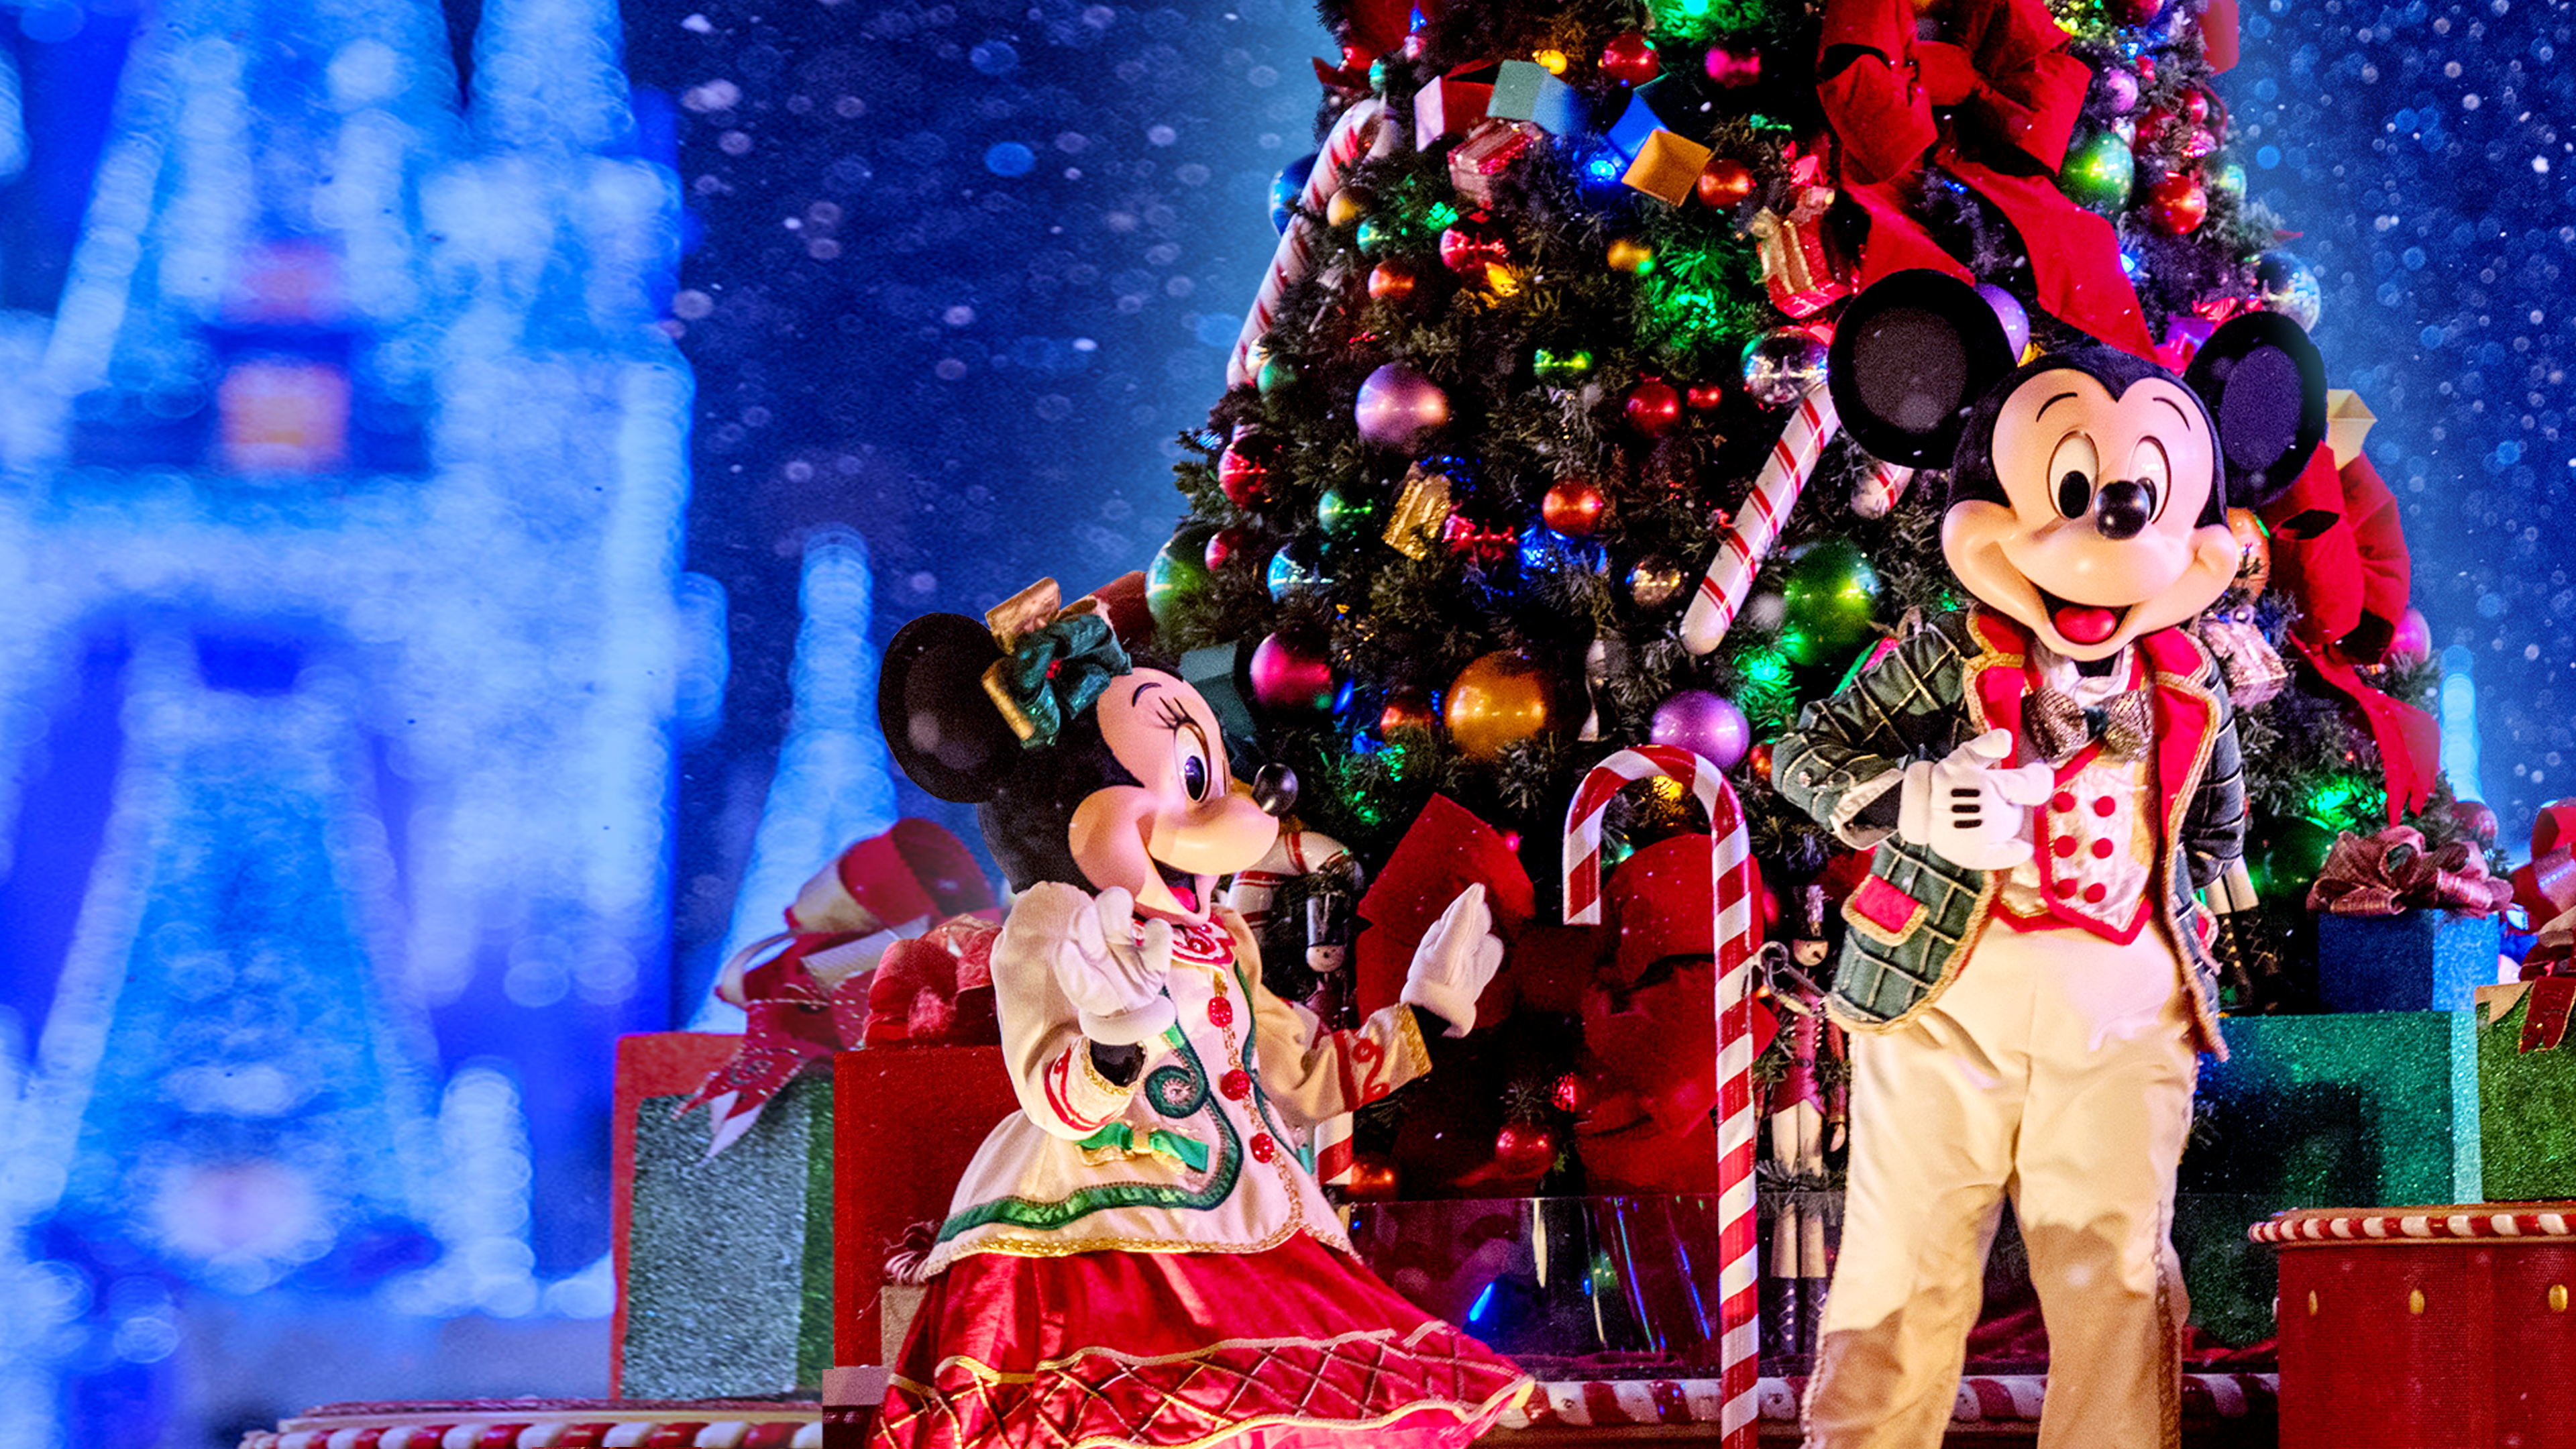 Decorating Disney : Holiday Magic